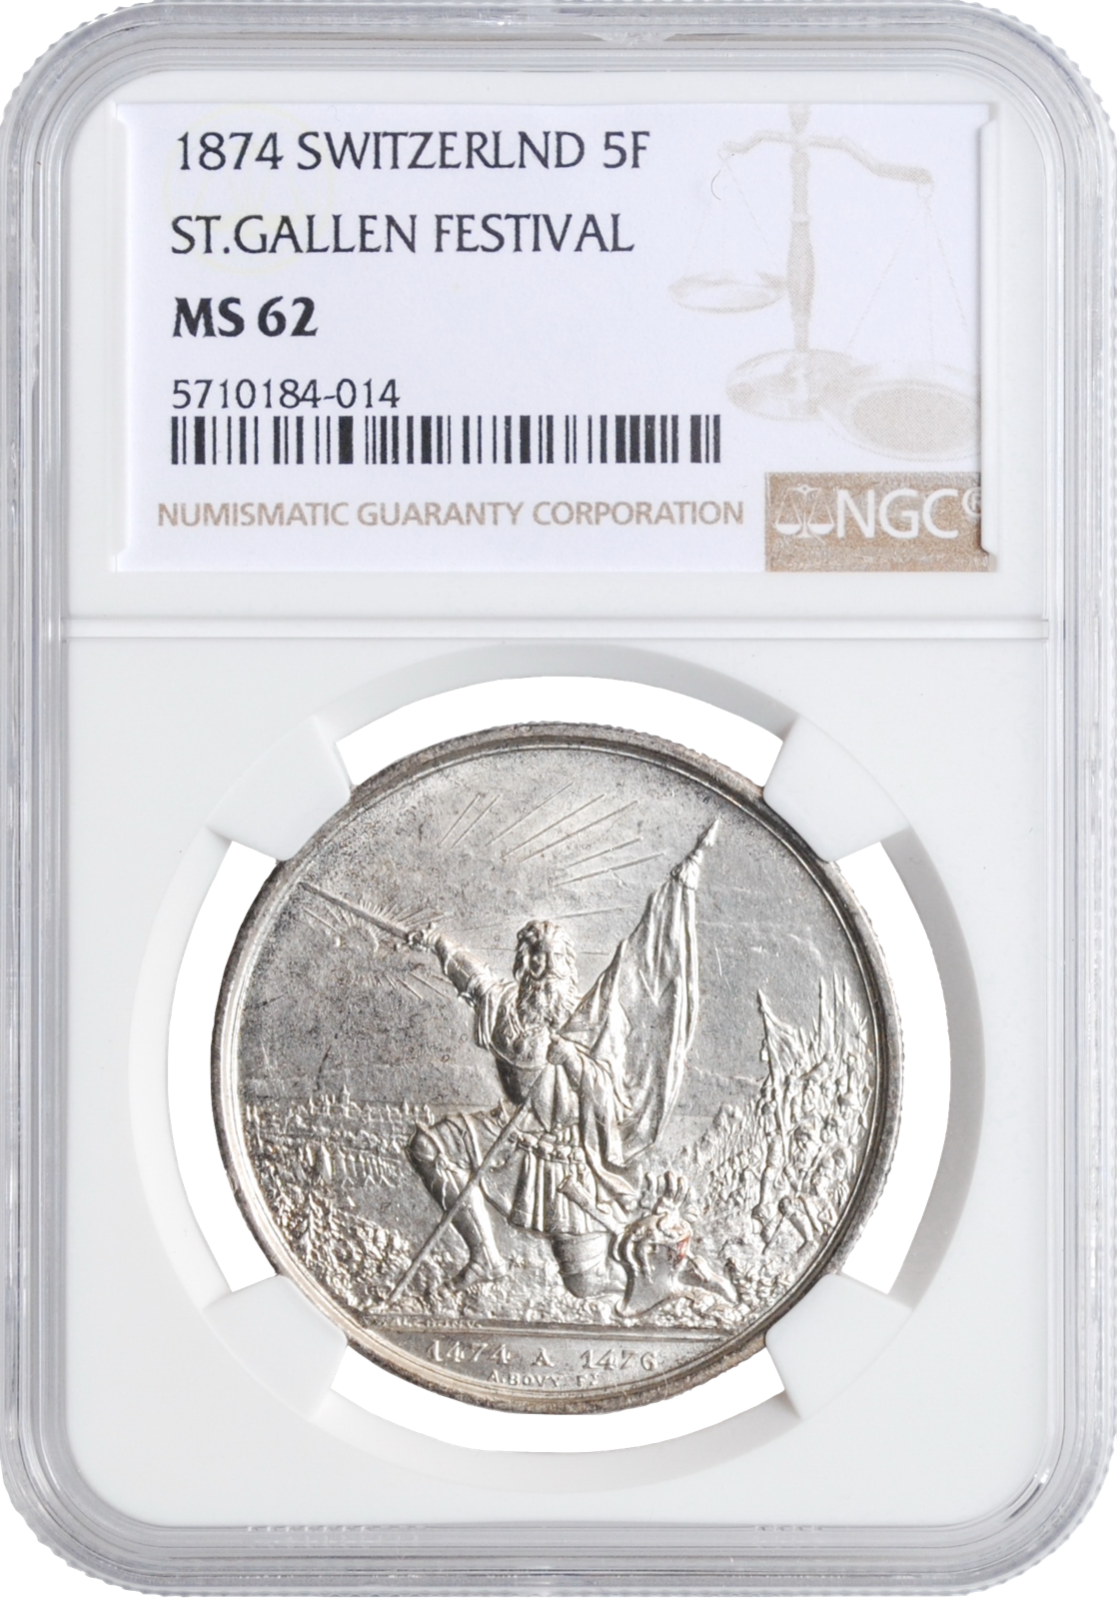 Switzerland 5 francs 1874, NGC MS62, 